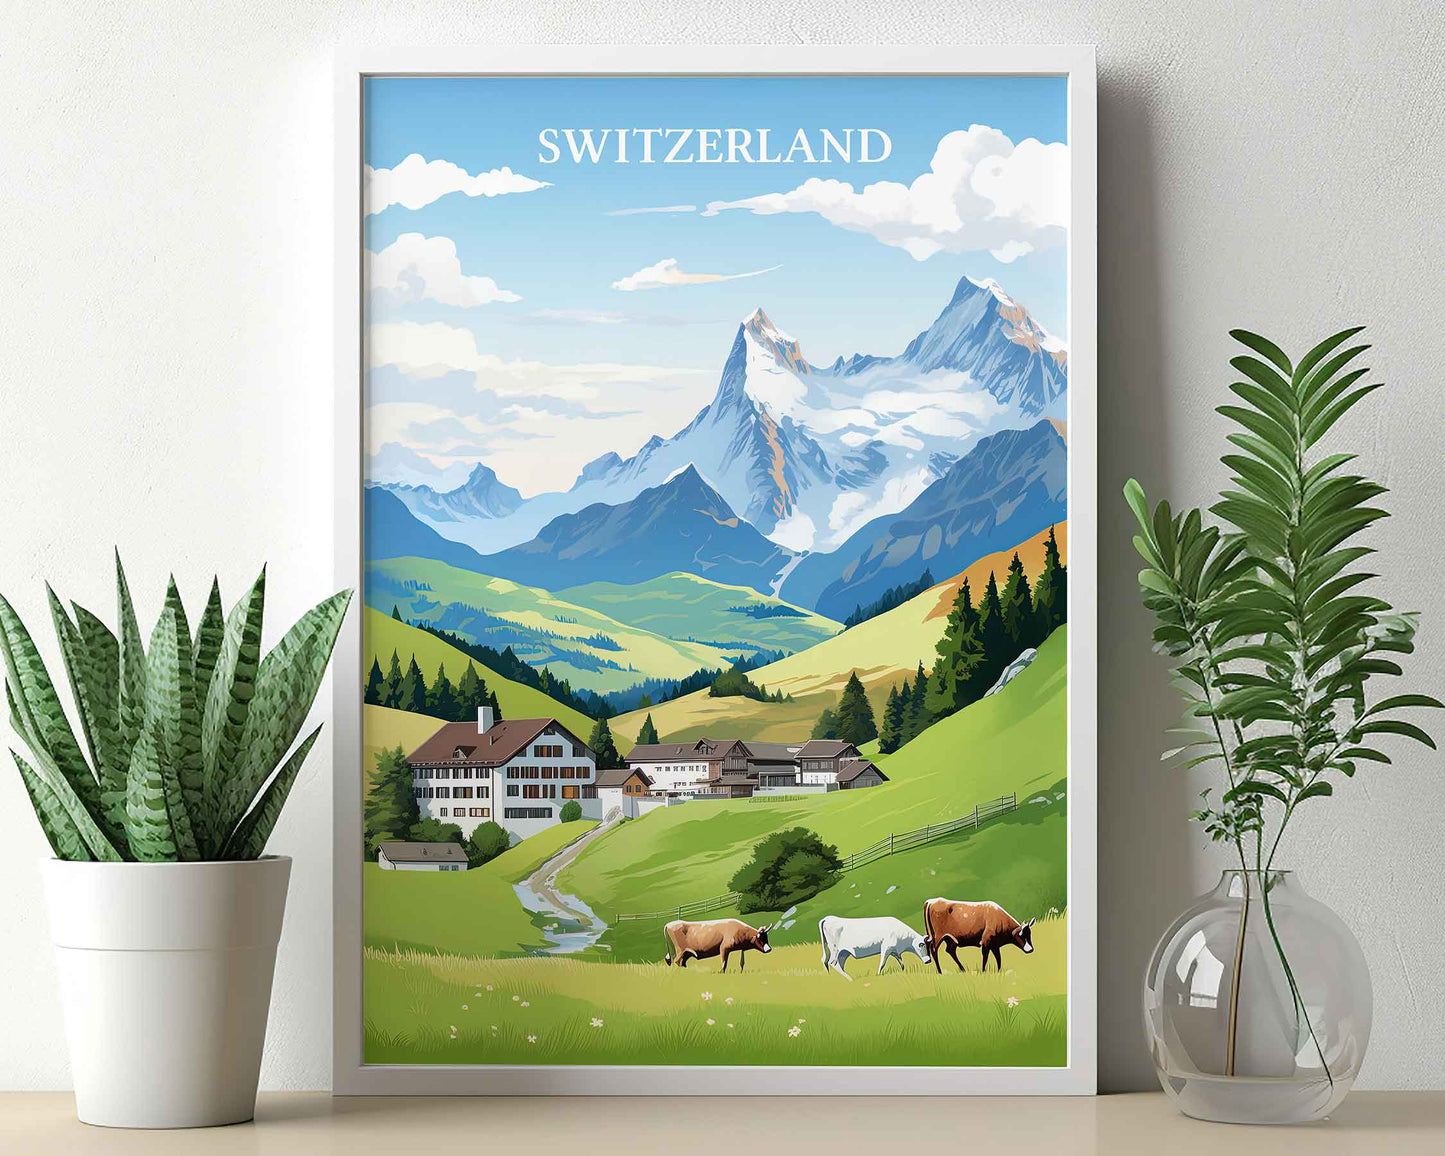 Framed Image of Swiss Alps Switzerland Illustration Travel Poster Prints Wall Art